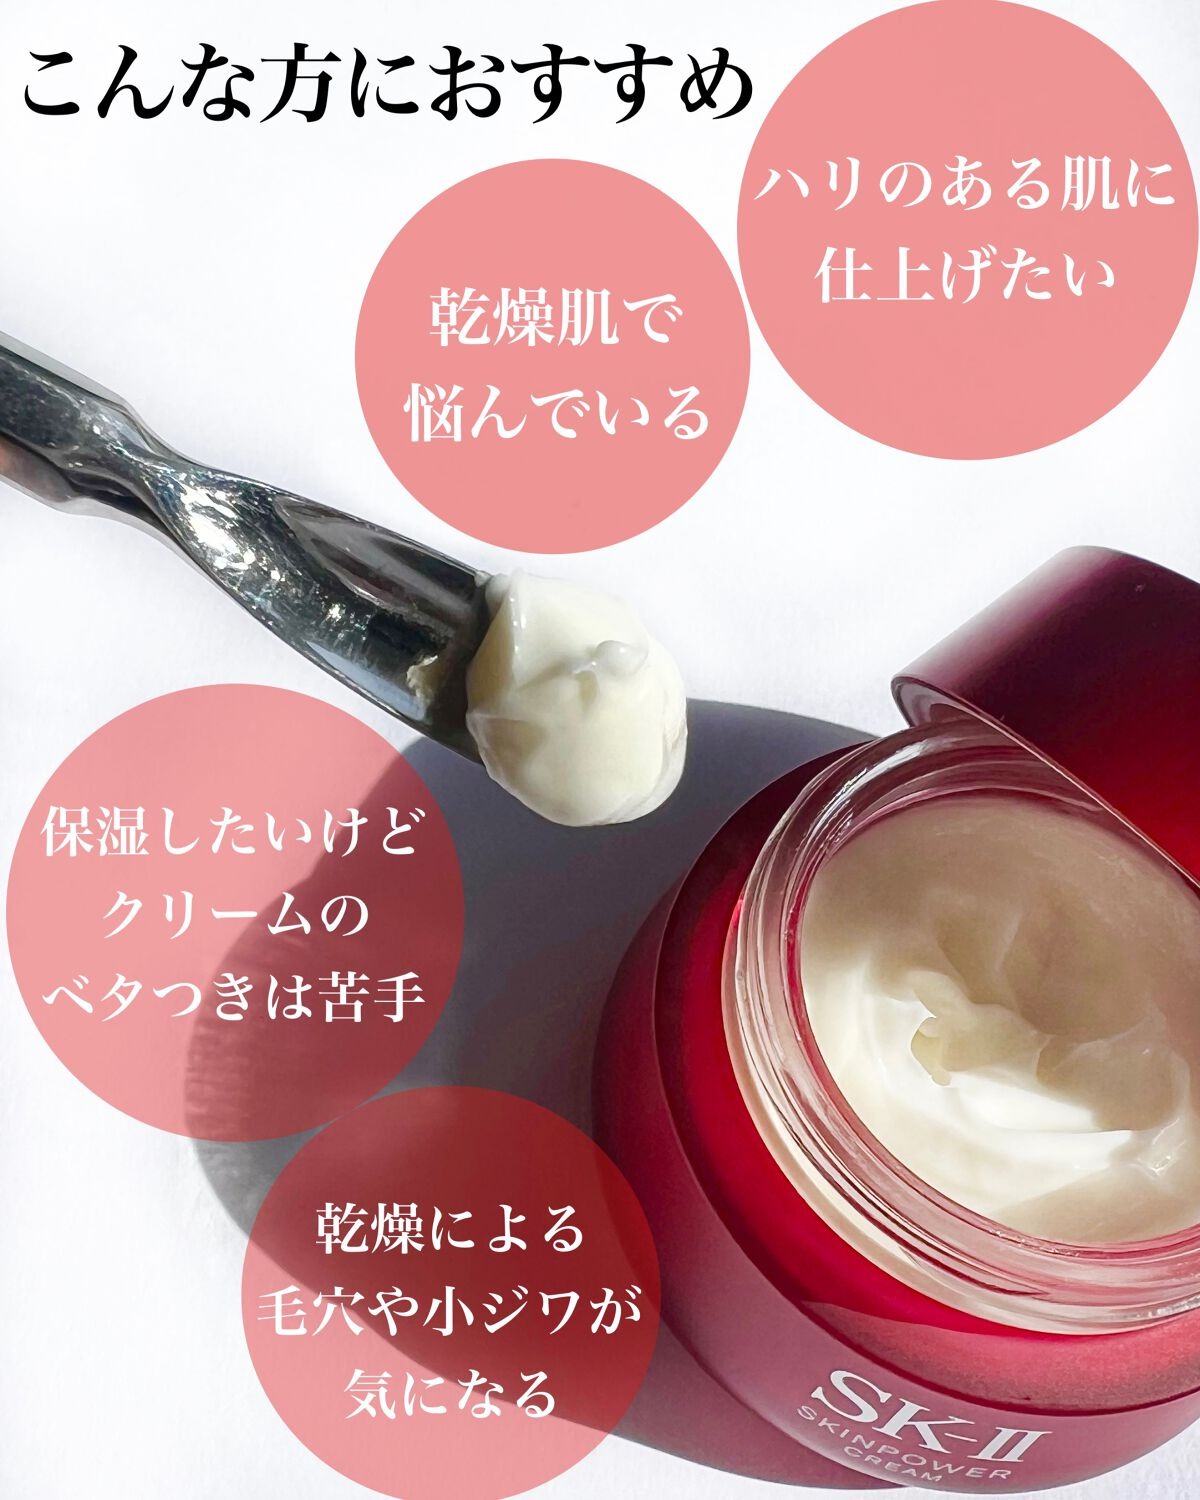 sk ii skinpower cream japan